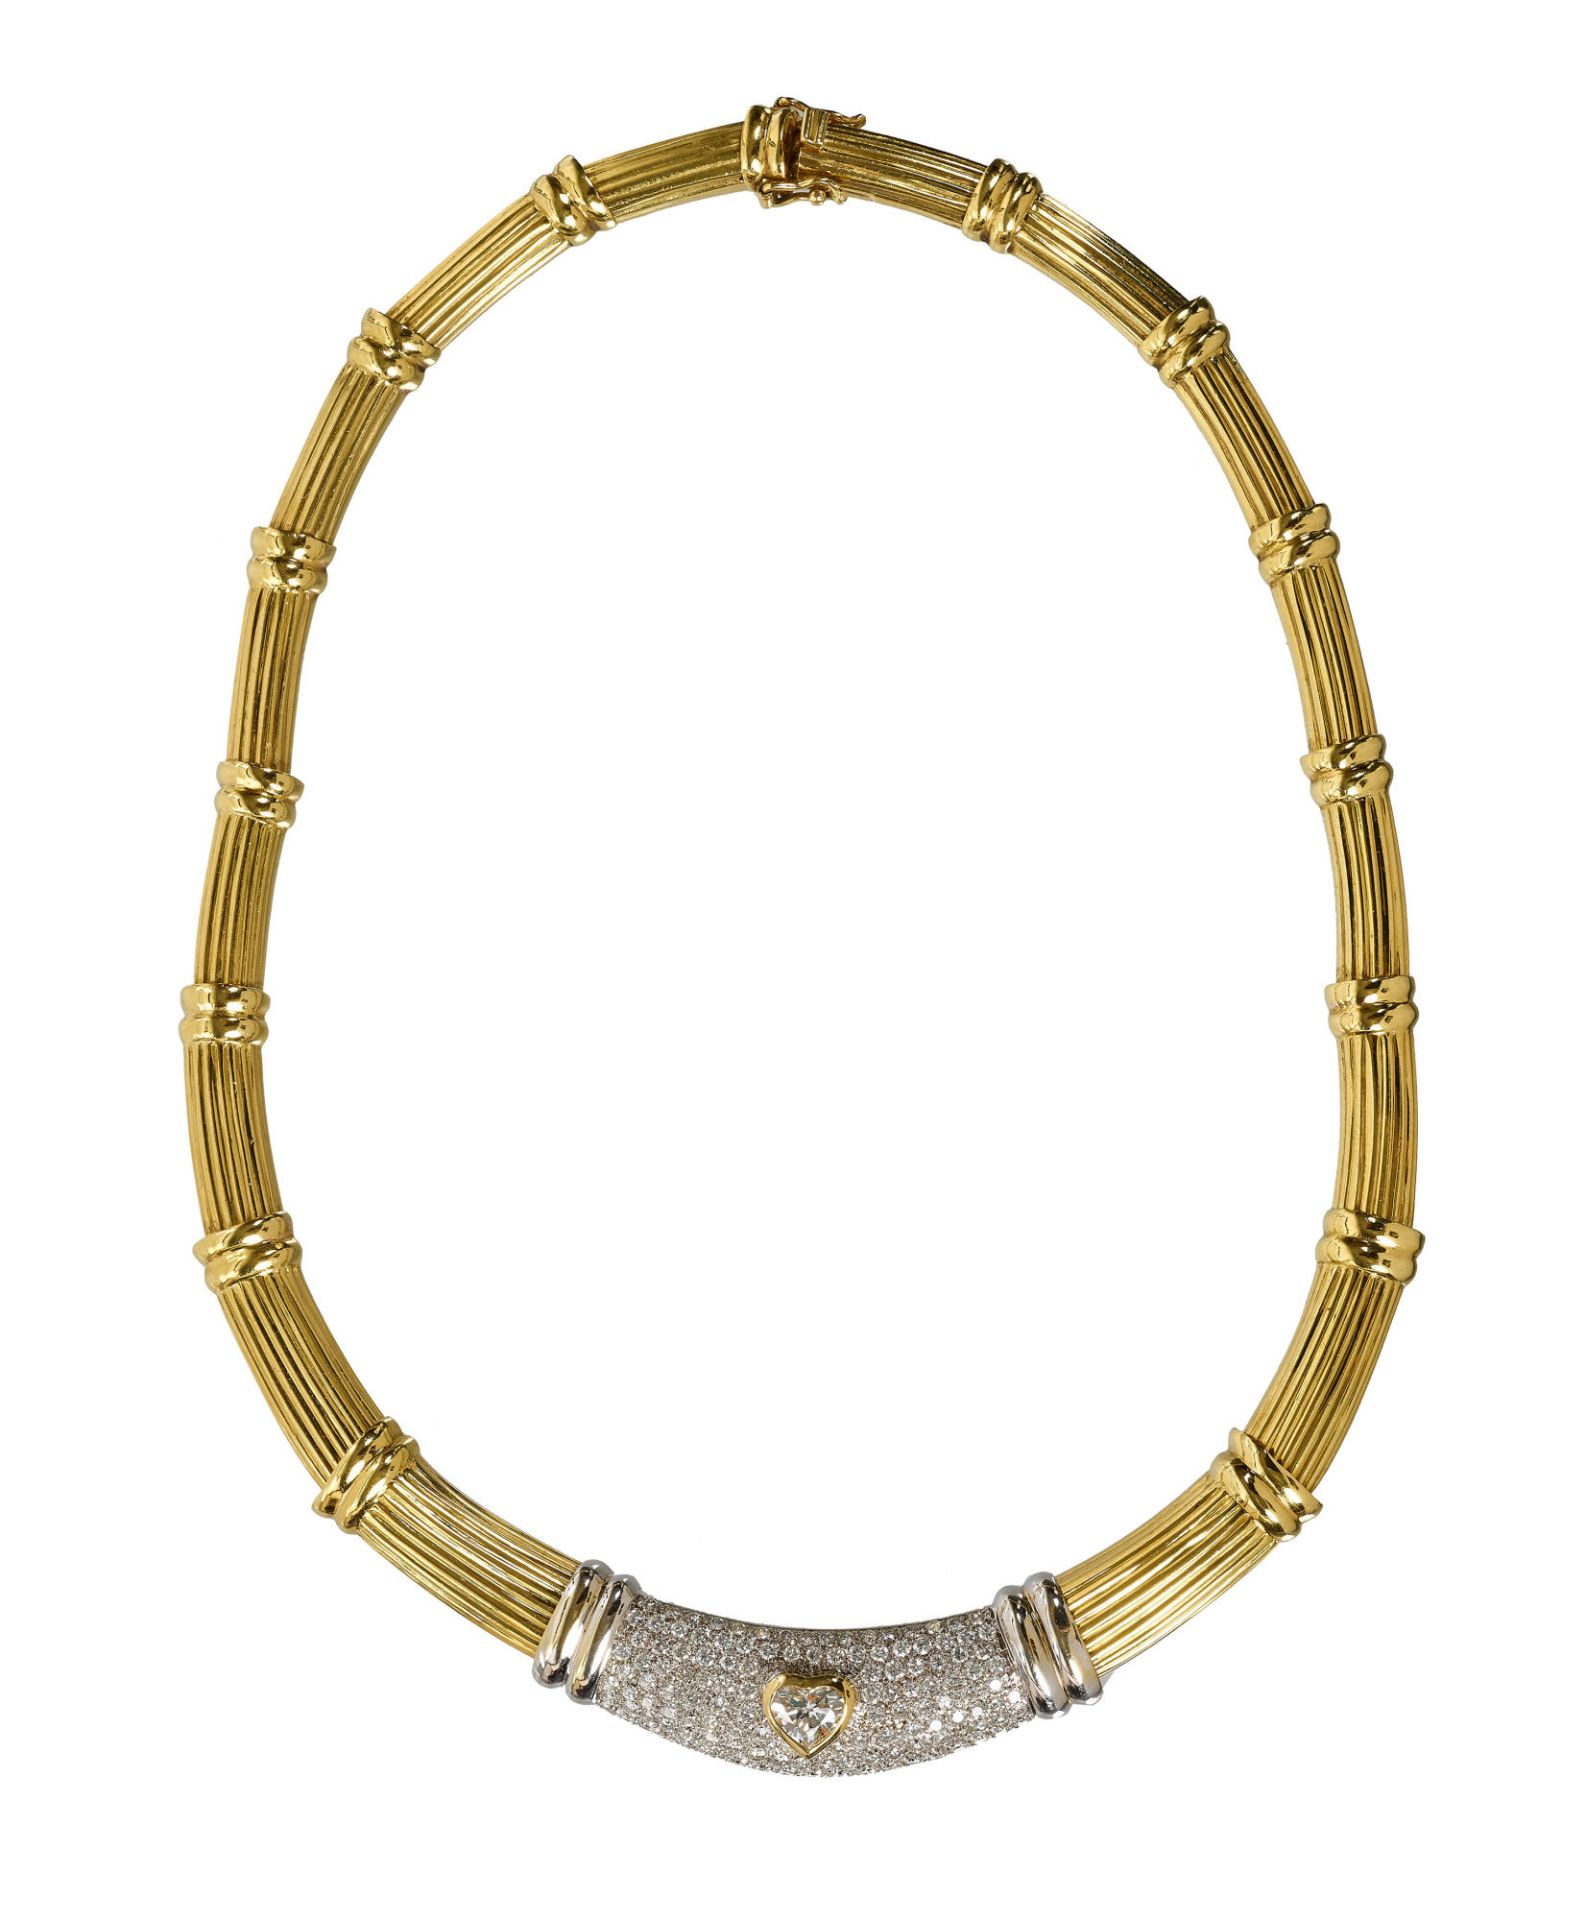 BRILLANT-COLLIER / Diamond-necklace  - Bild 2 aus 2